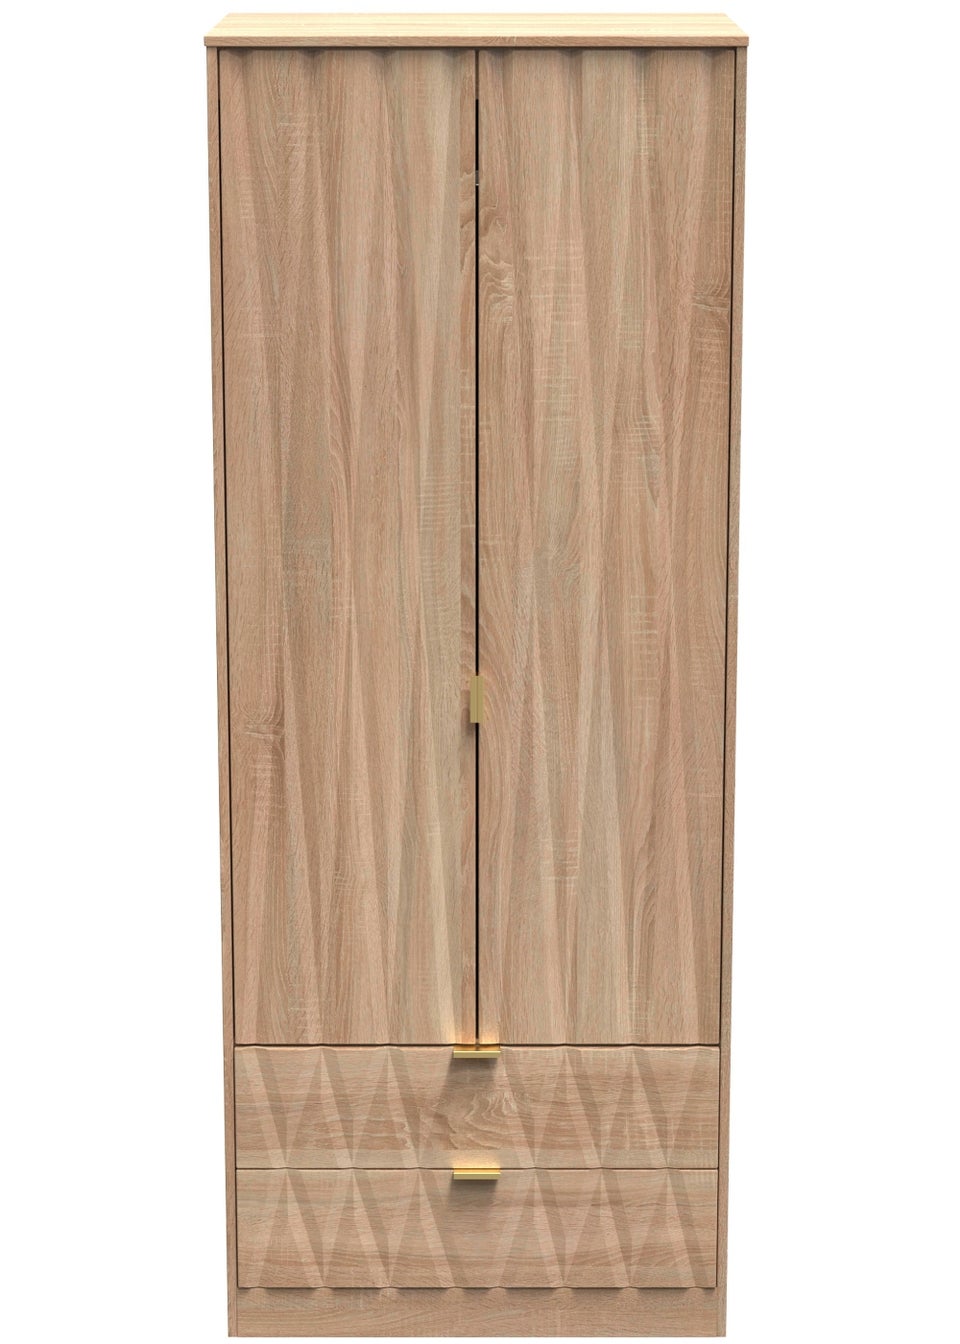 Swift Prism 2 Door 2 Drawer Wardrobe (197cm x 77cm x 53cm)